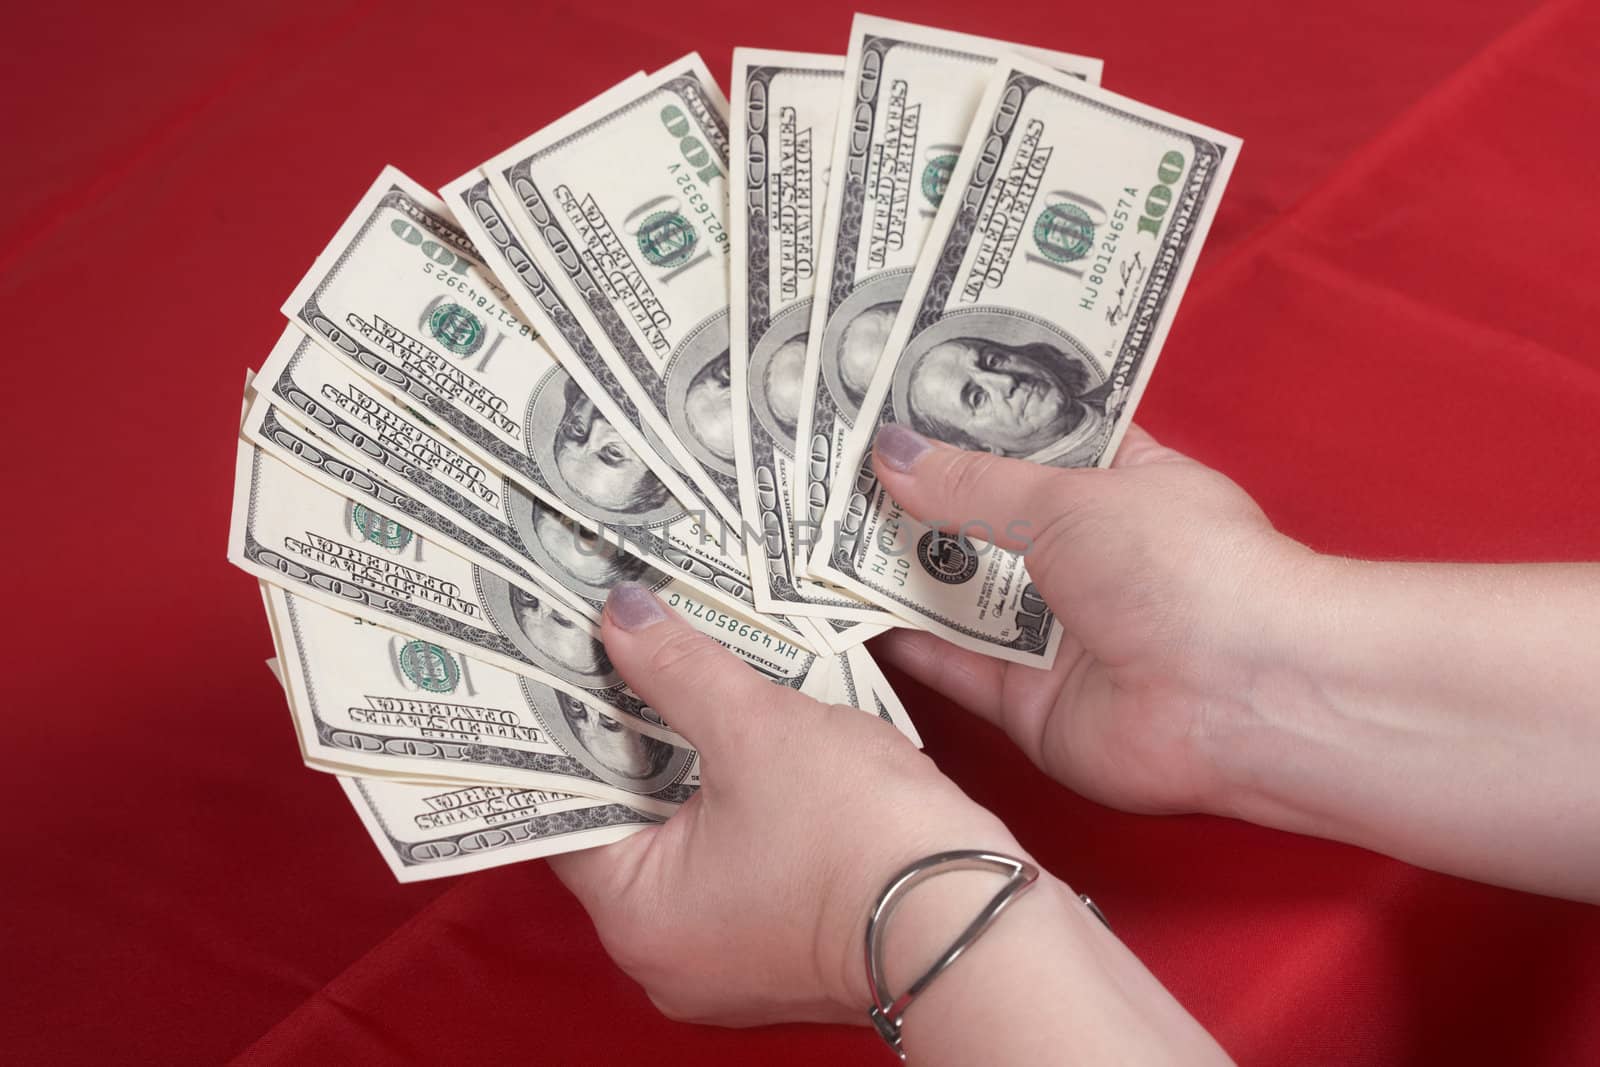 Hands and dollars by petrkurgan